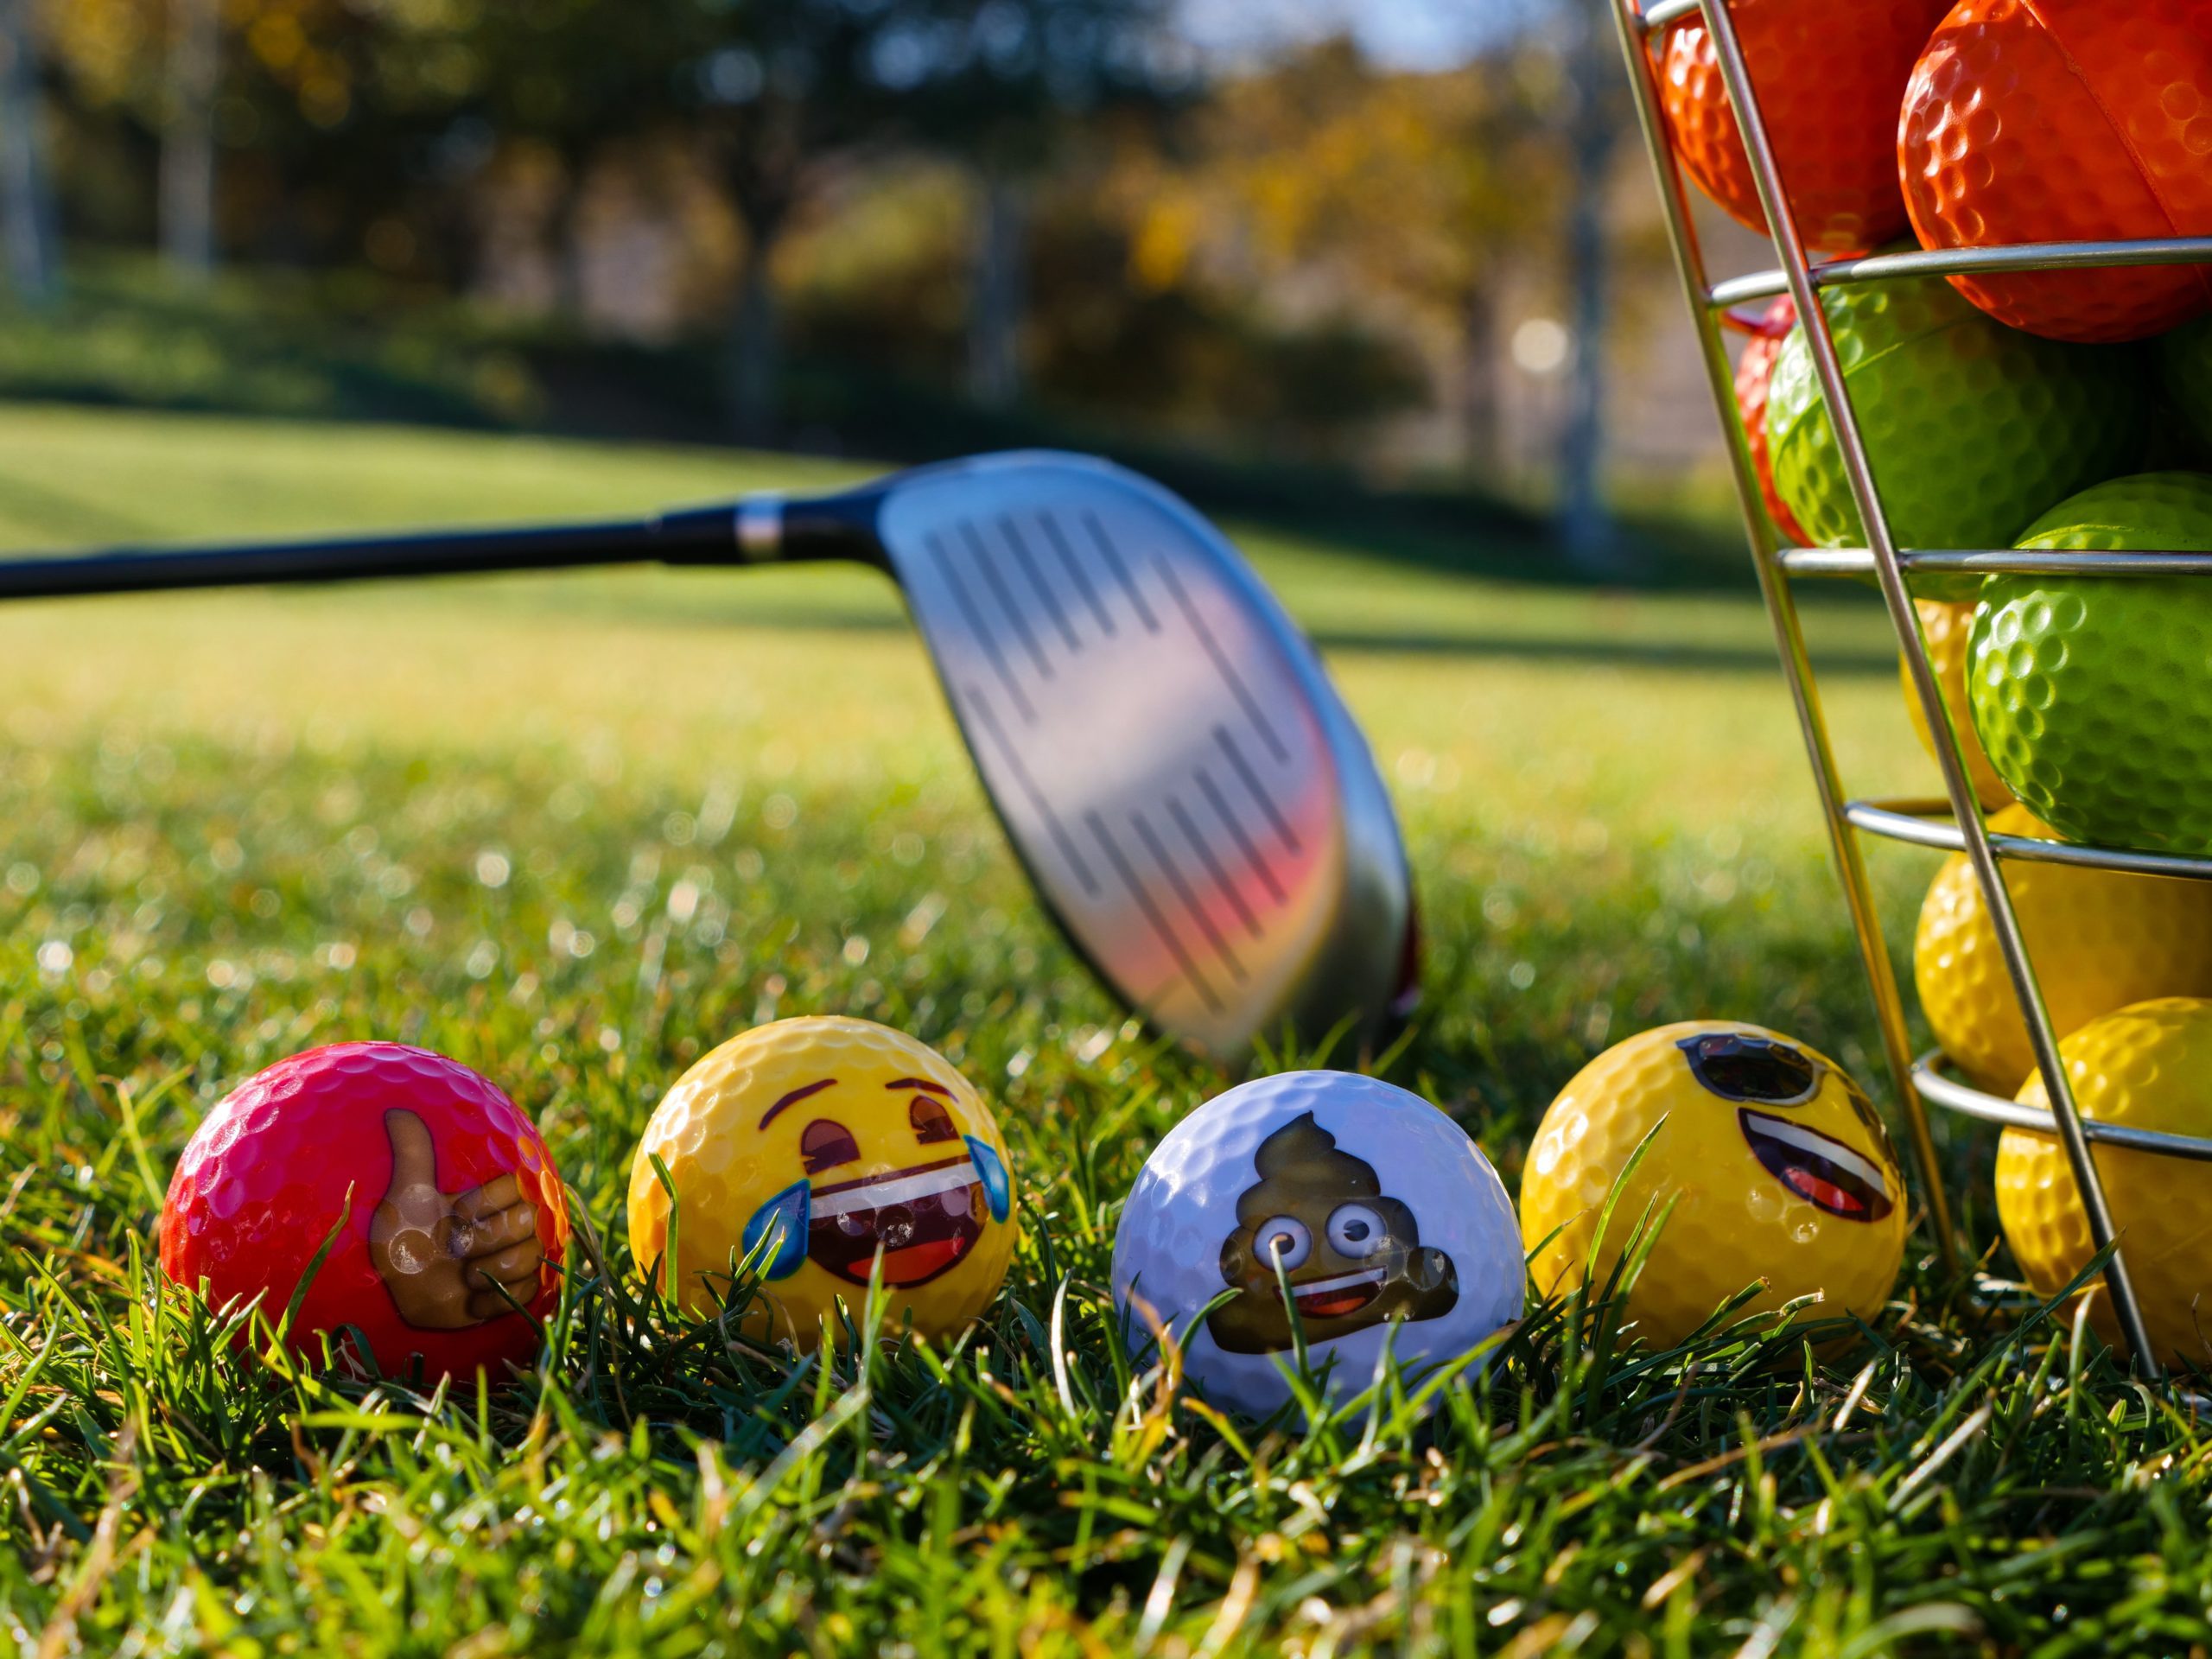 golf balls with emojis on grass